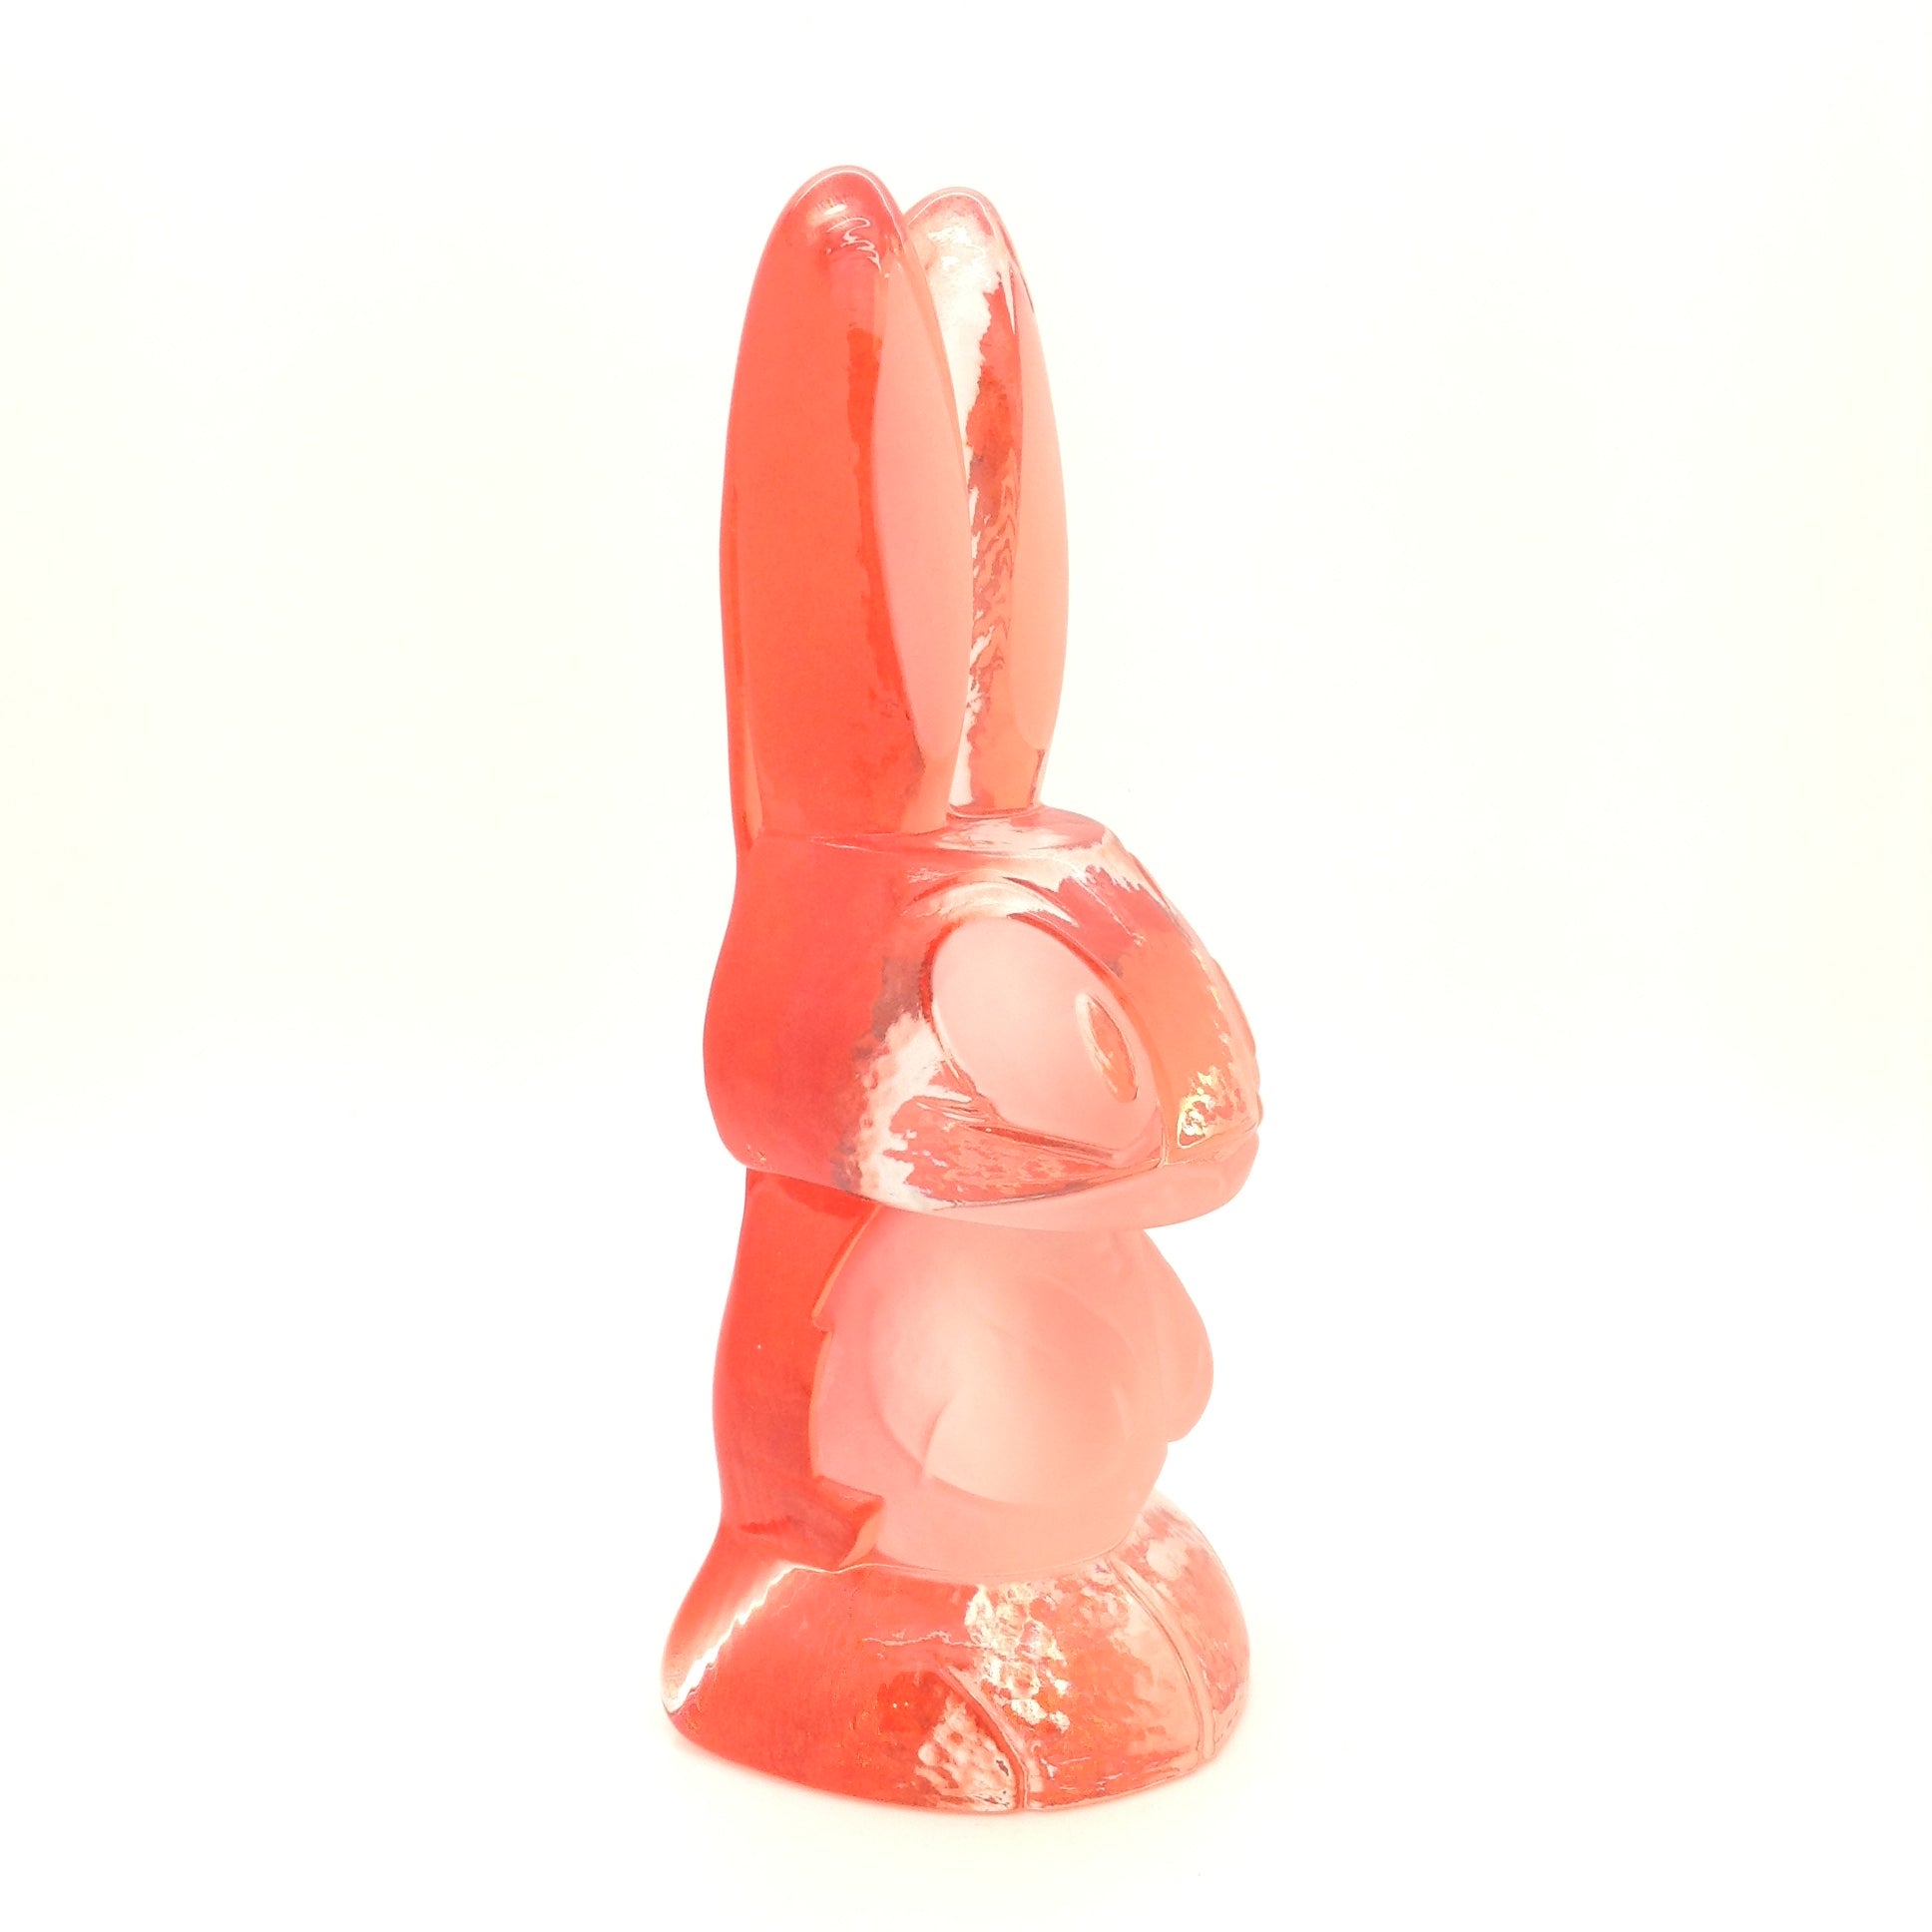 Mr. Bunny Art Toy Figure by Joe Ledbetter x Ikea Art Event 2018